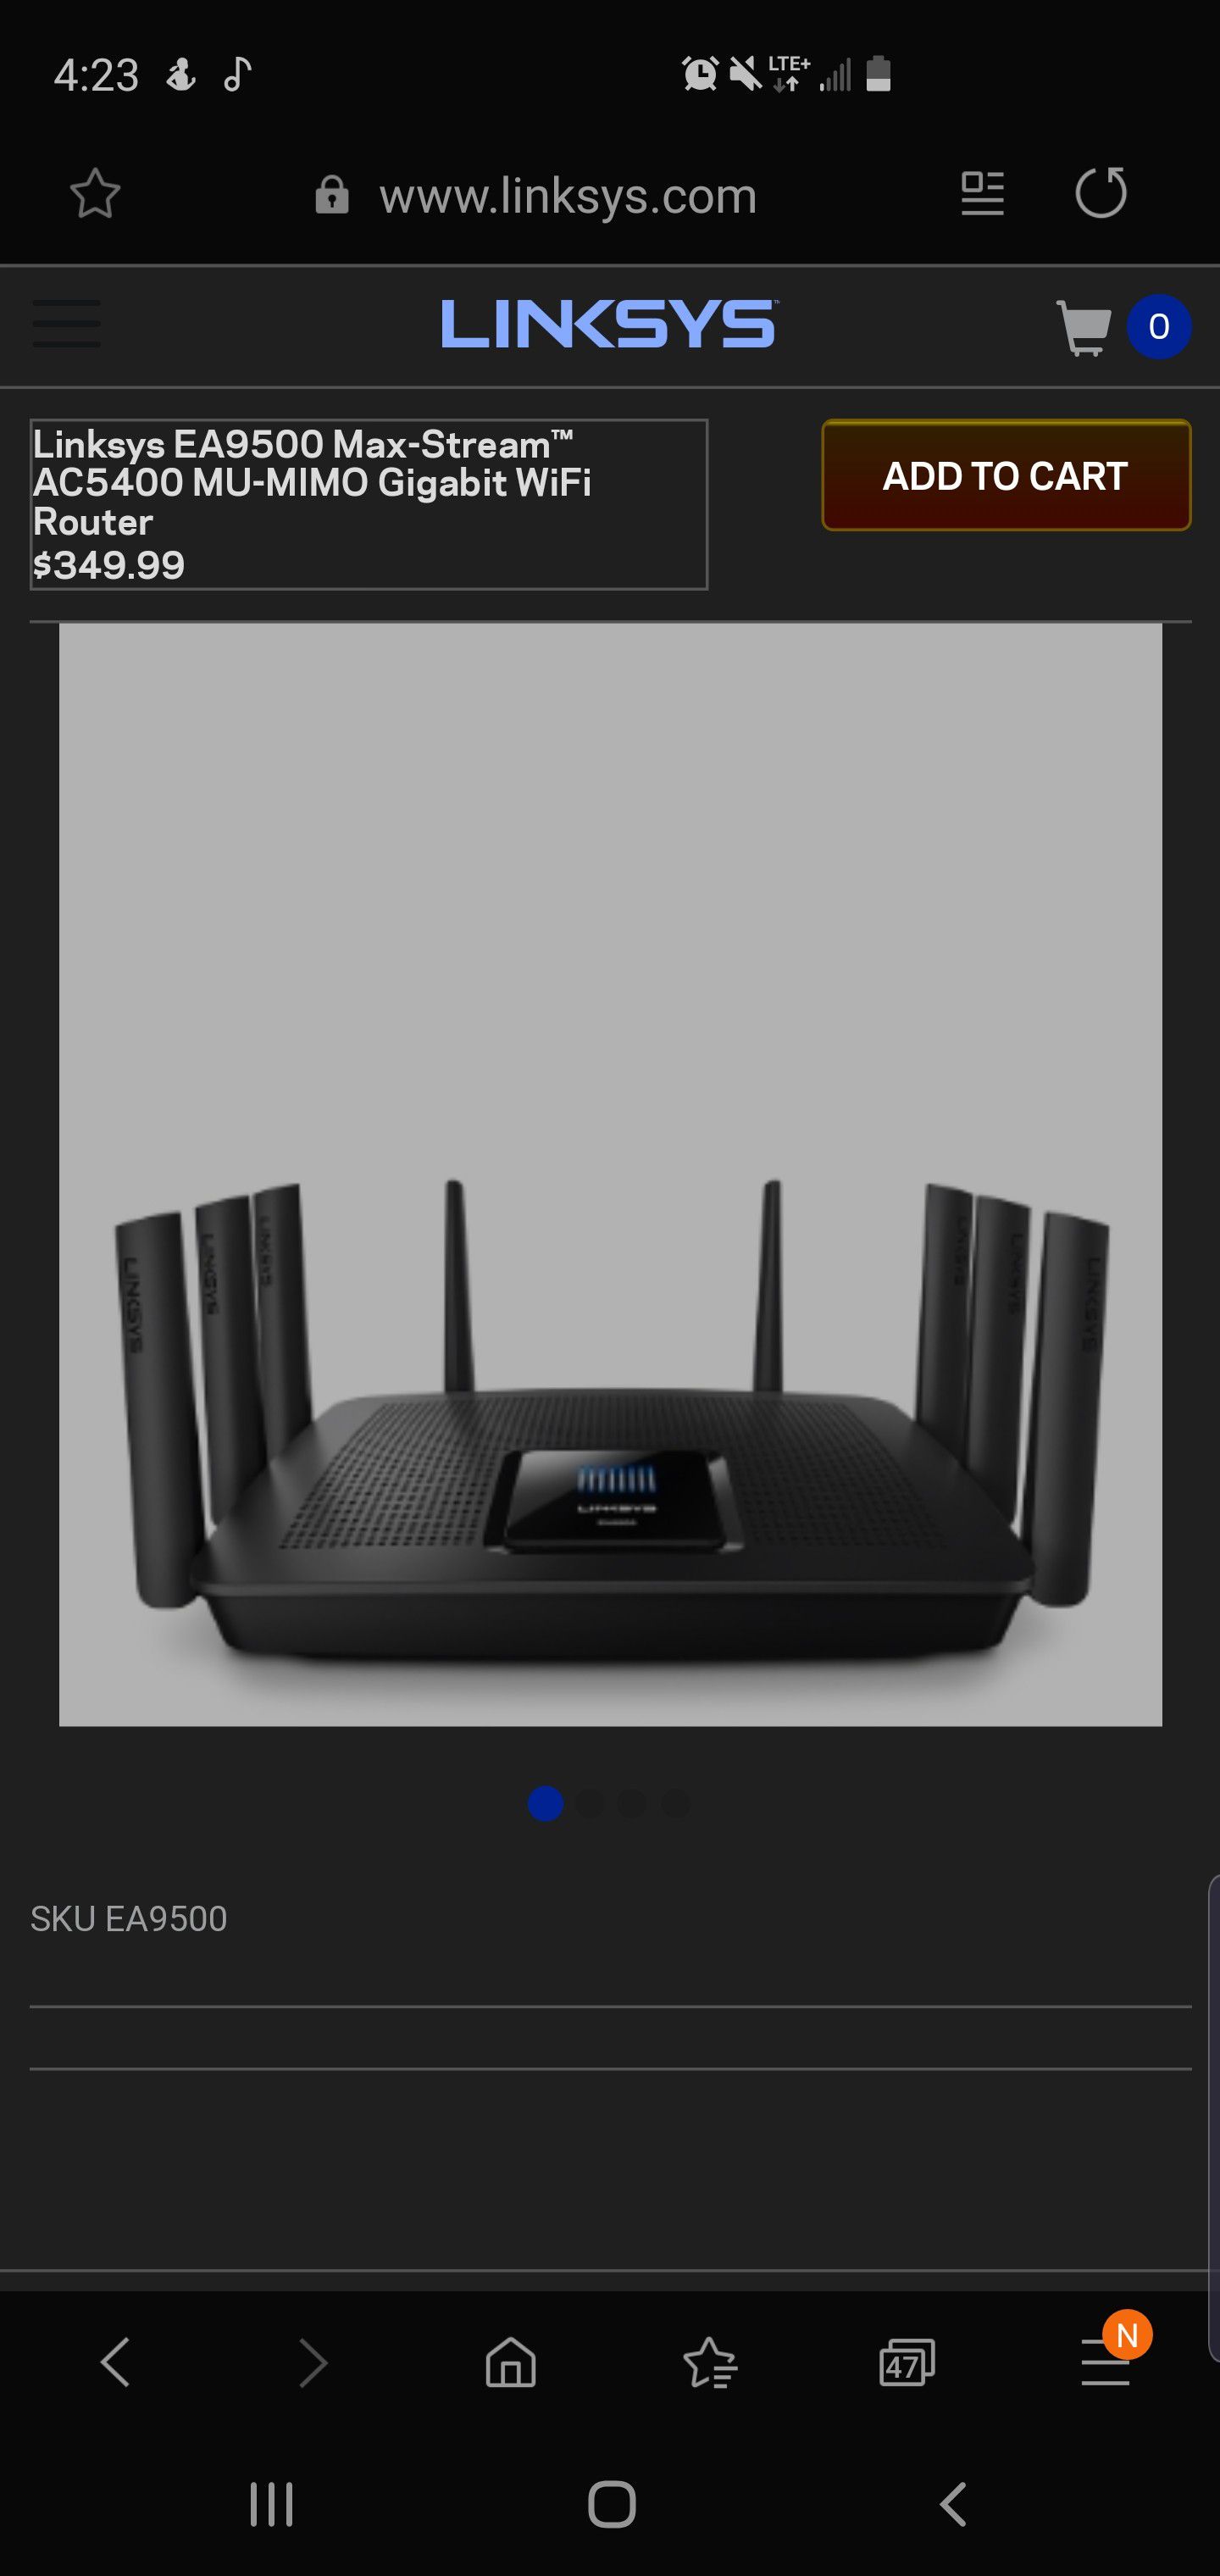 Linksys EA9500 Max-Stream™ AC5400 MU-MIMO Gigabit WiFi Router